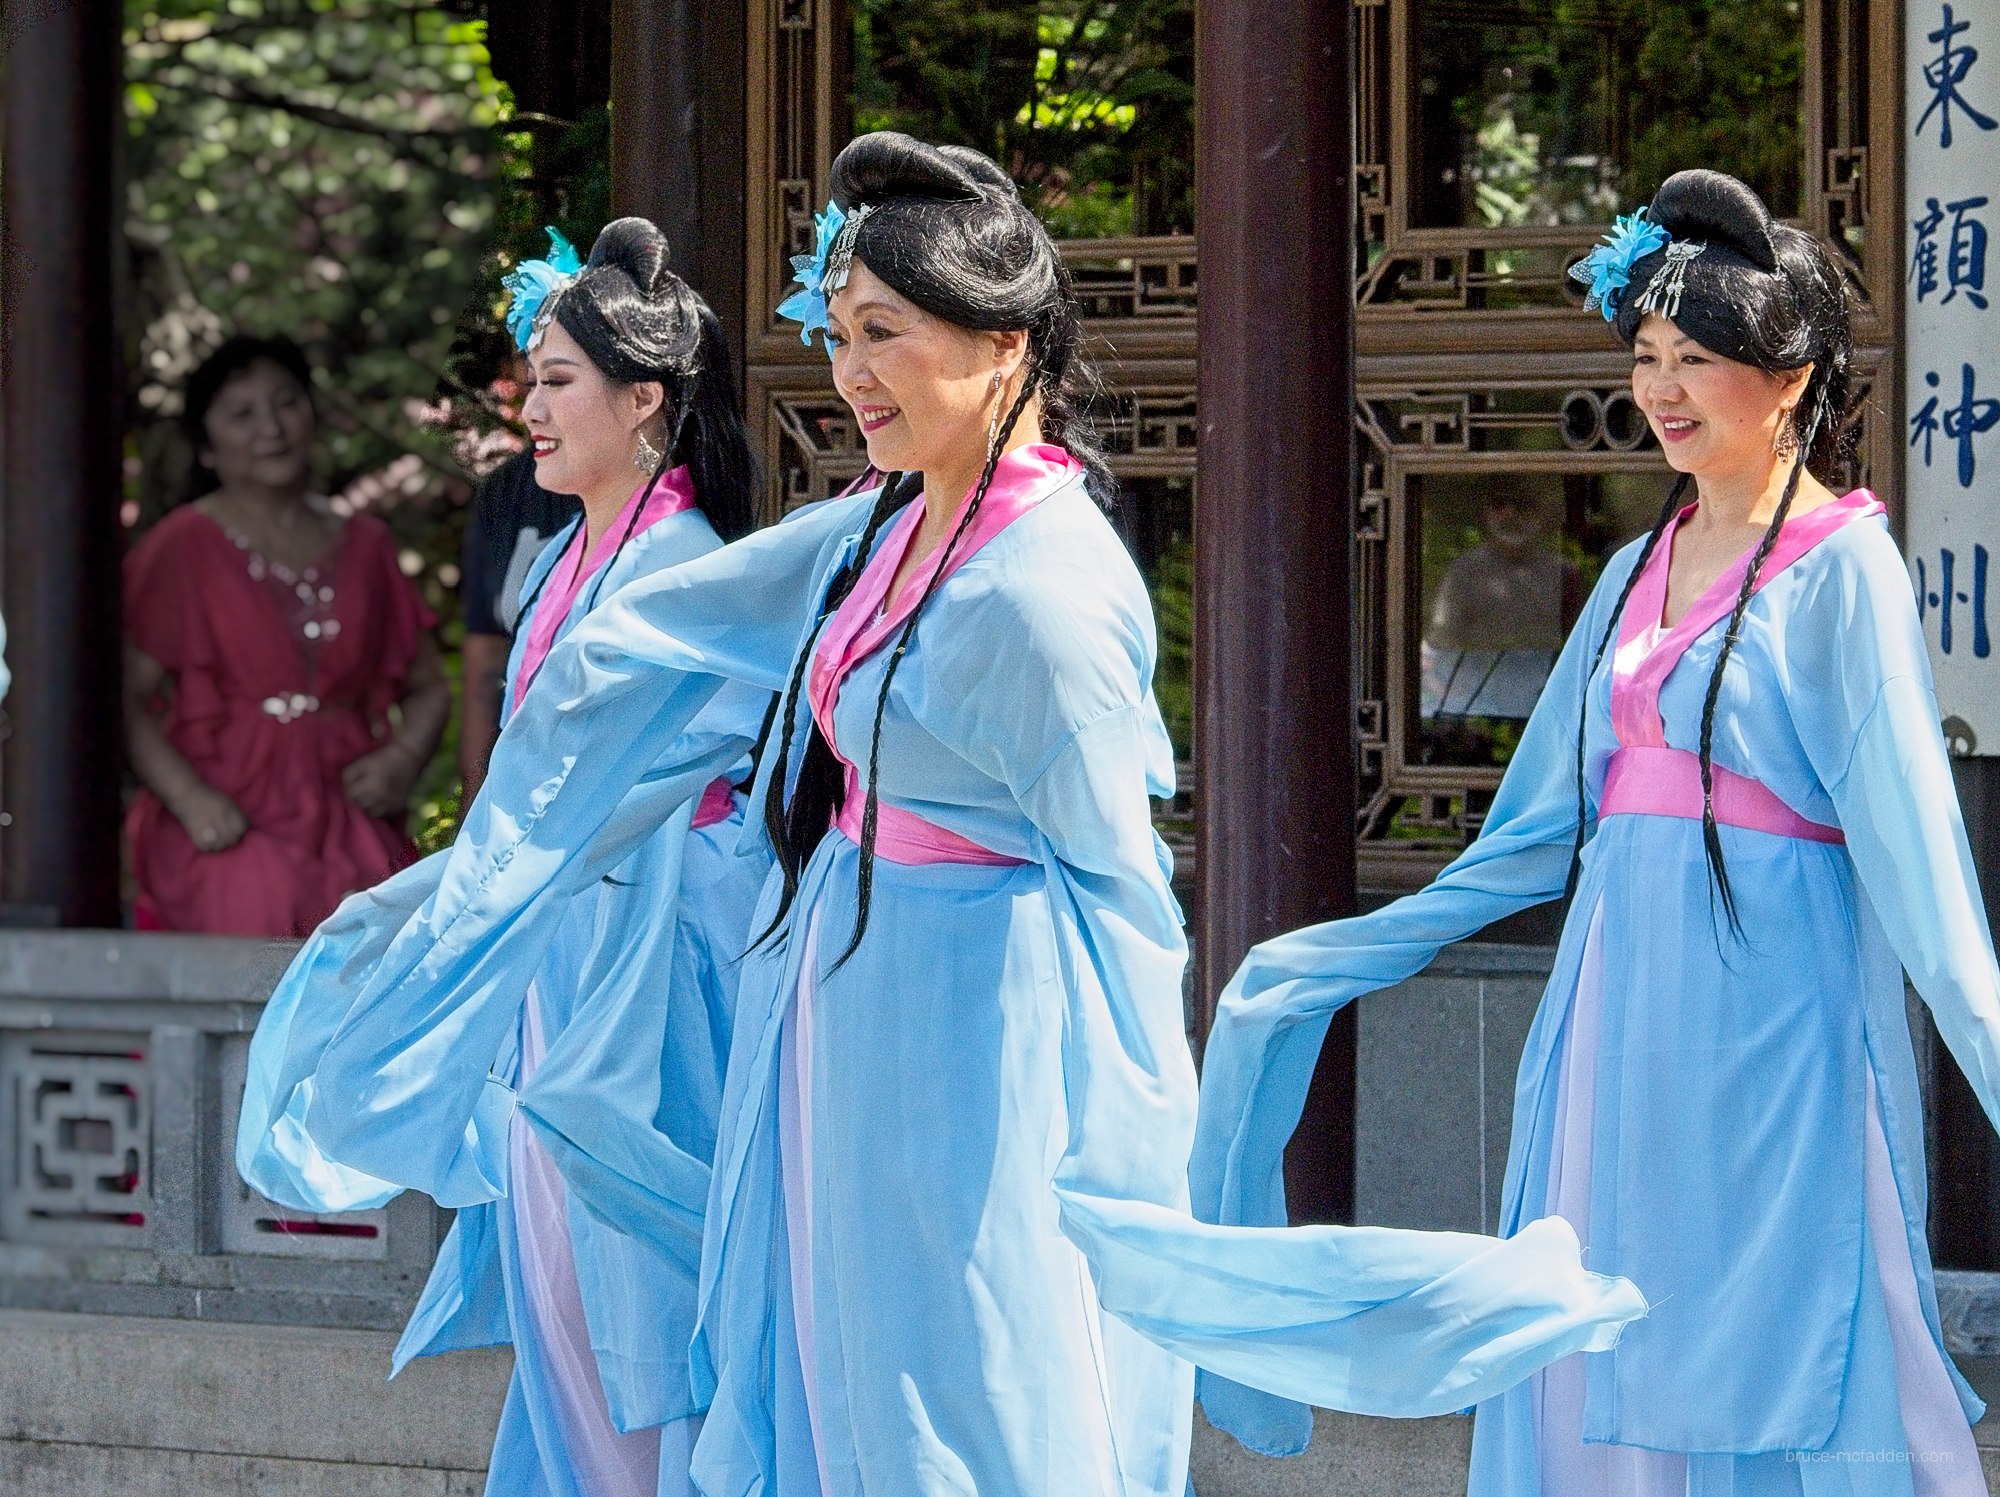 190512-Lan Su Chinese Garden Dance-025